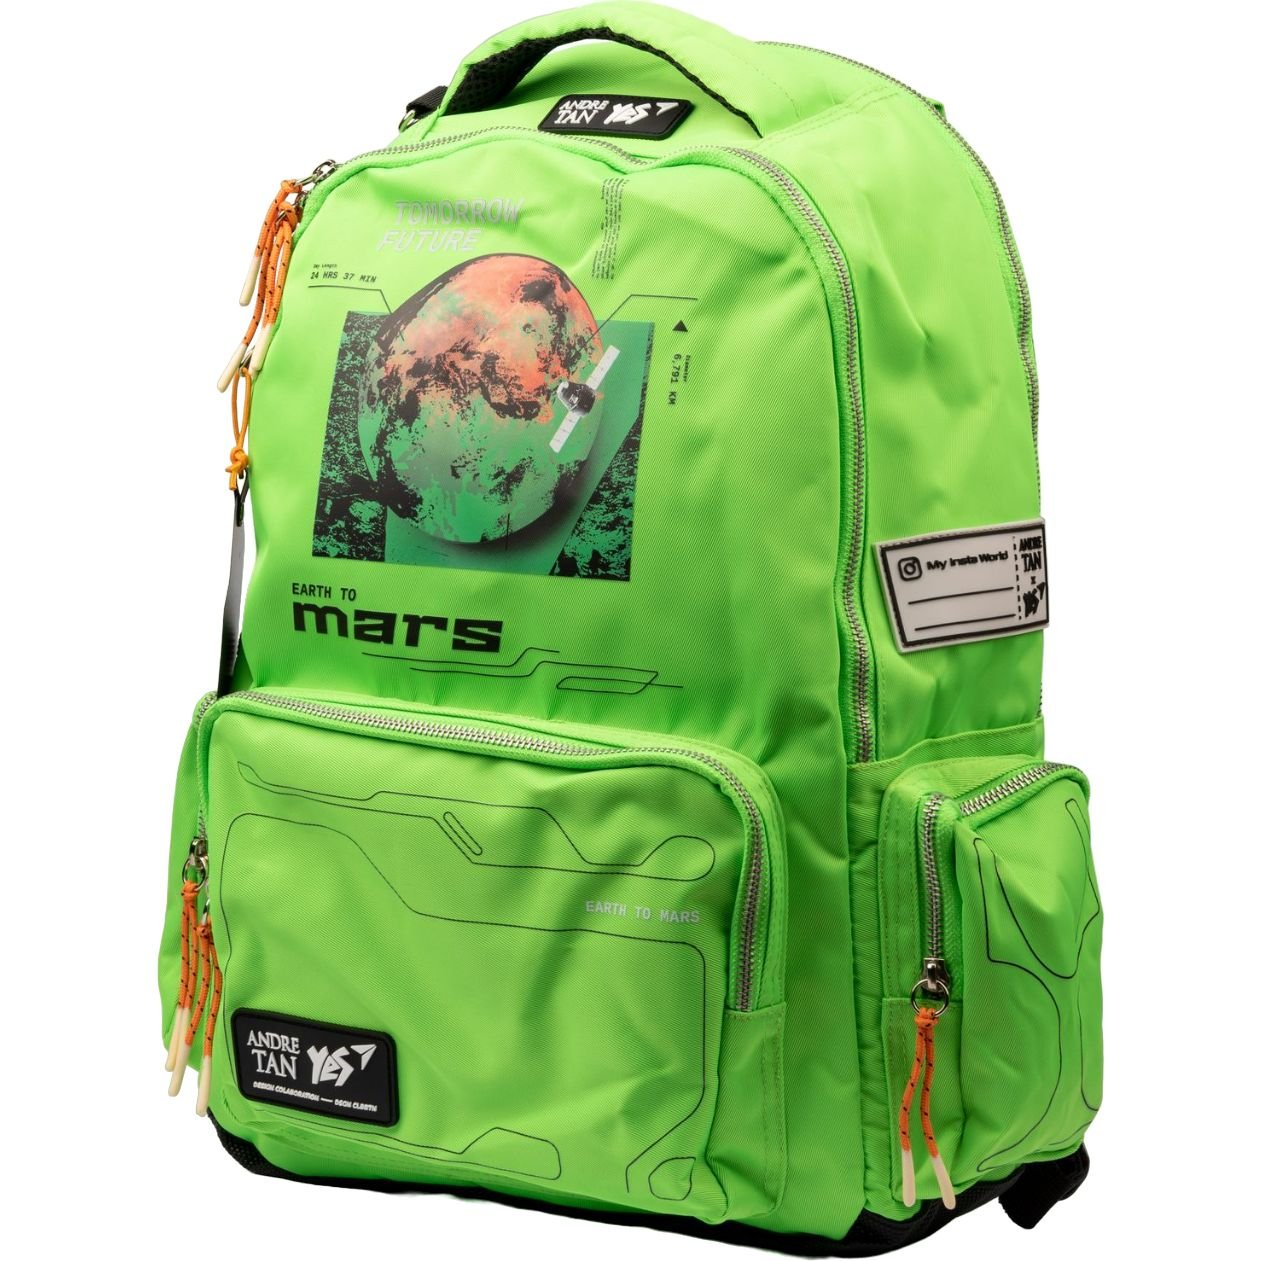 Фото - Шкільний рюкзак (ранець) Yes Рюкзак  T-131 Andre Tan Space green  (559049)